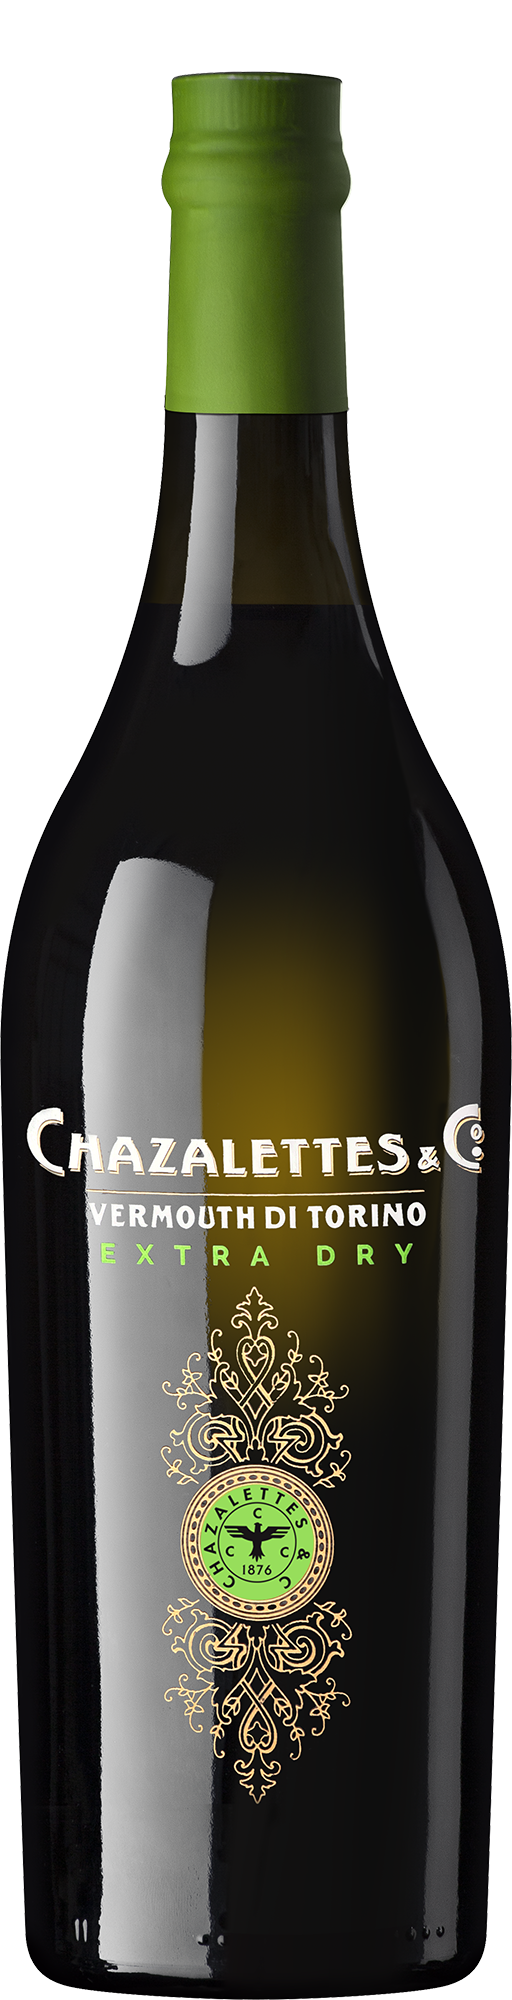 Chazalettes & Co. Vermouth de Torino Extra Dry (750ml)